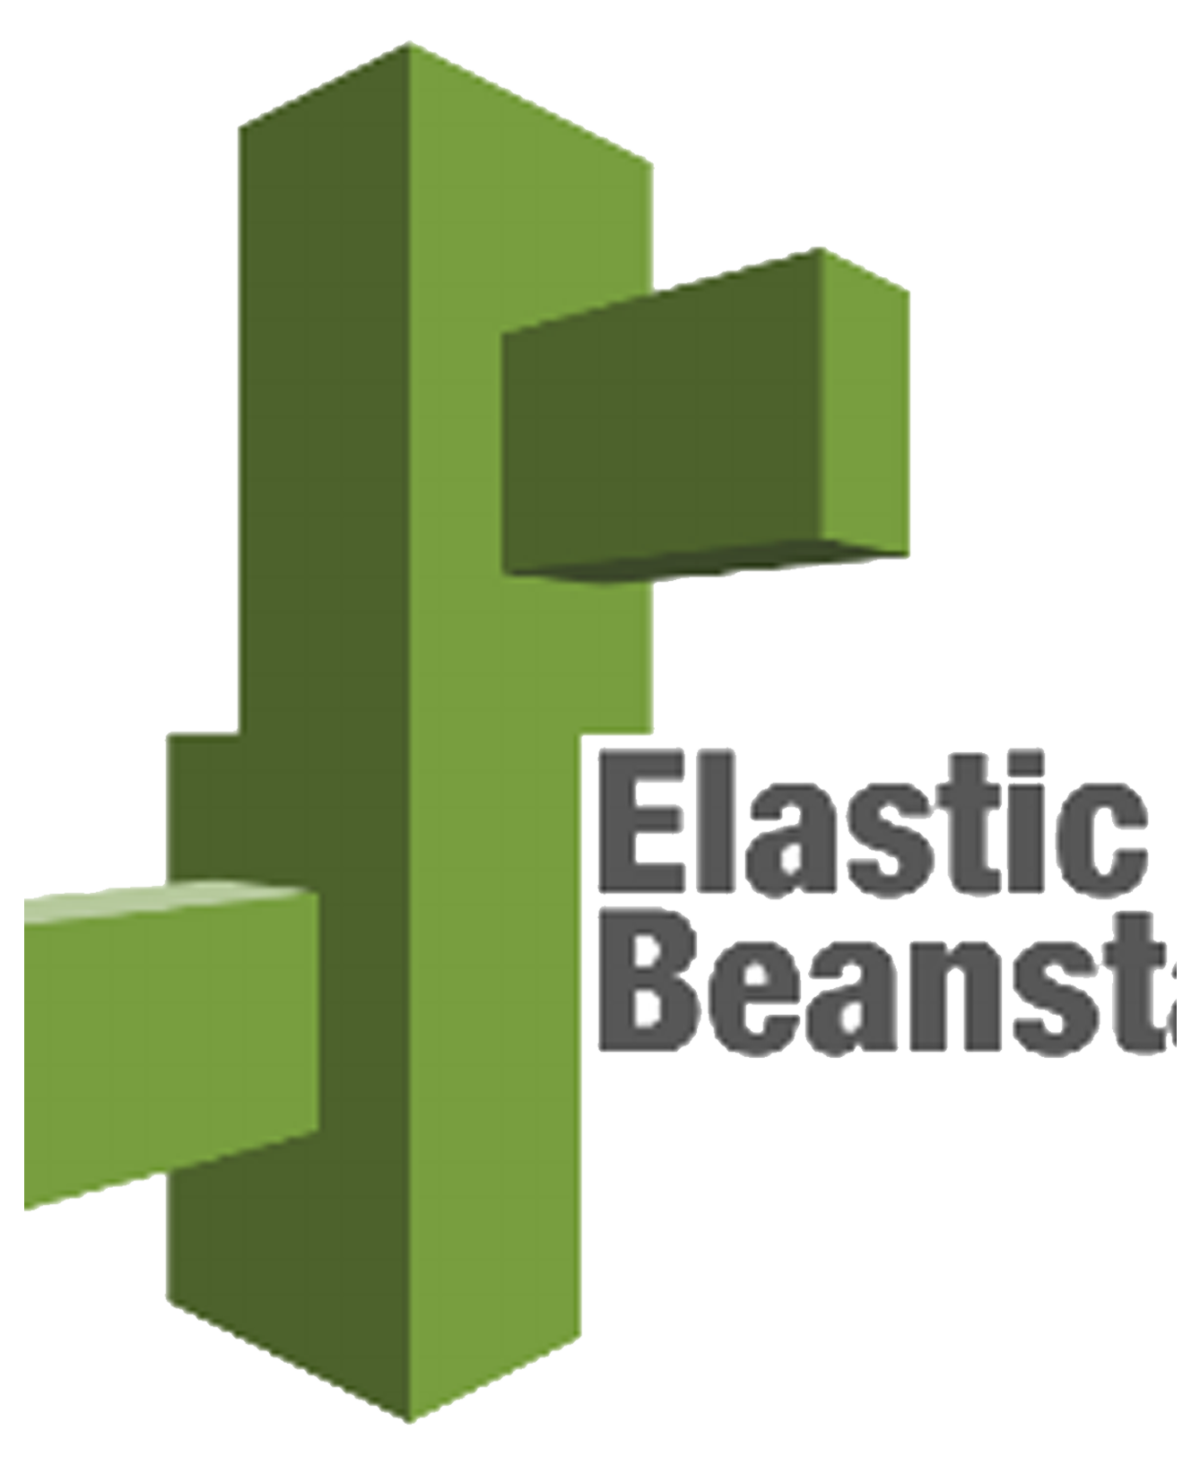 AWS Elastic Beanstalk Vector Logo - Download Free SVG Icon